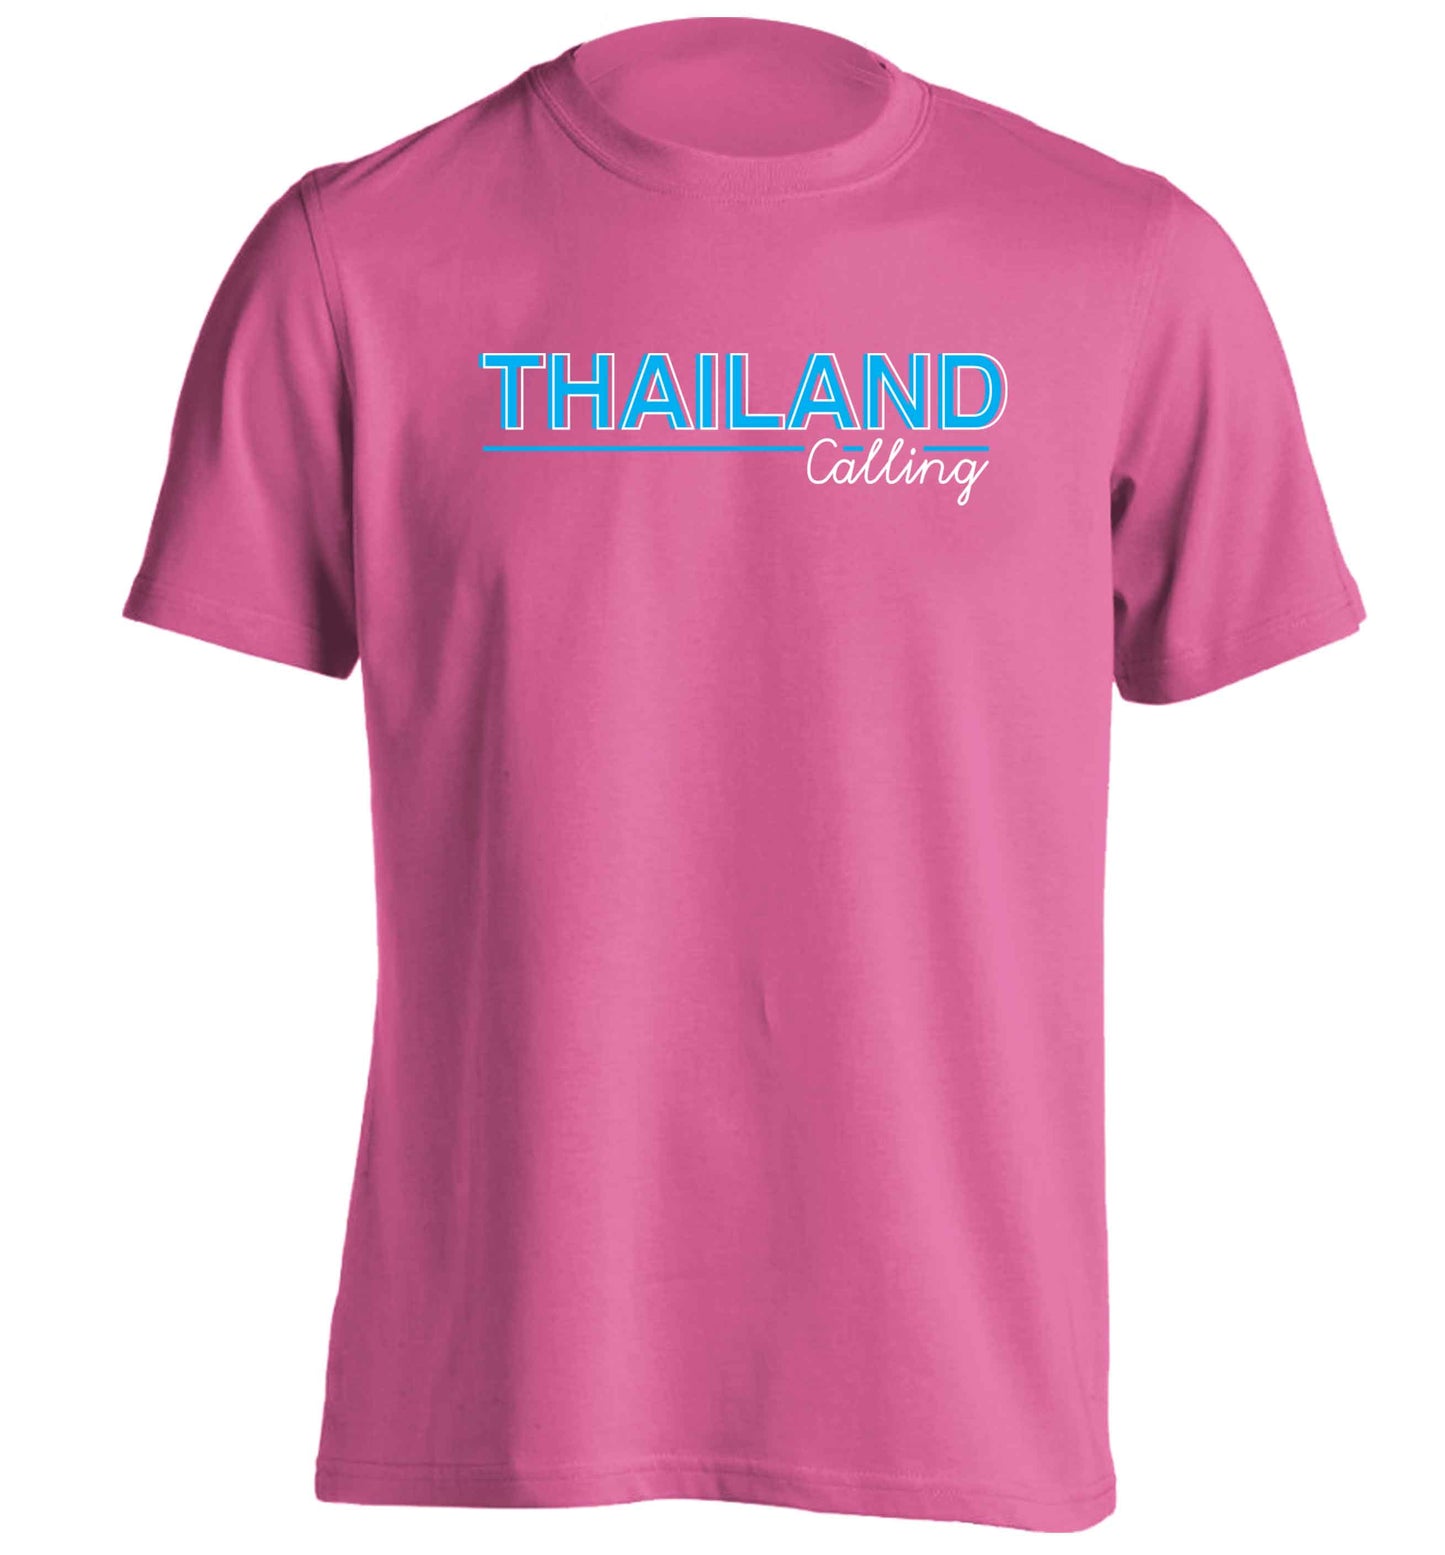 Thailand calling adults unisex pink Tshirt 2XL